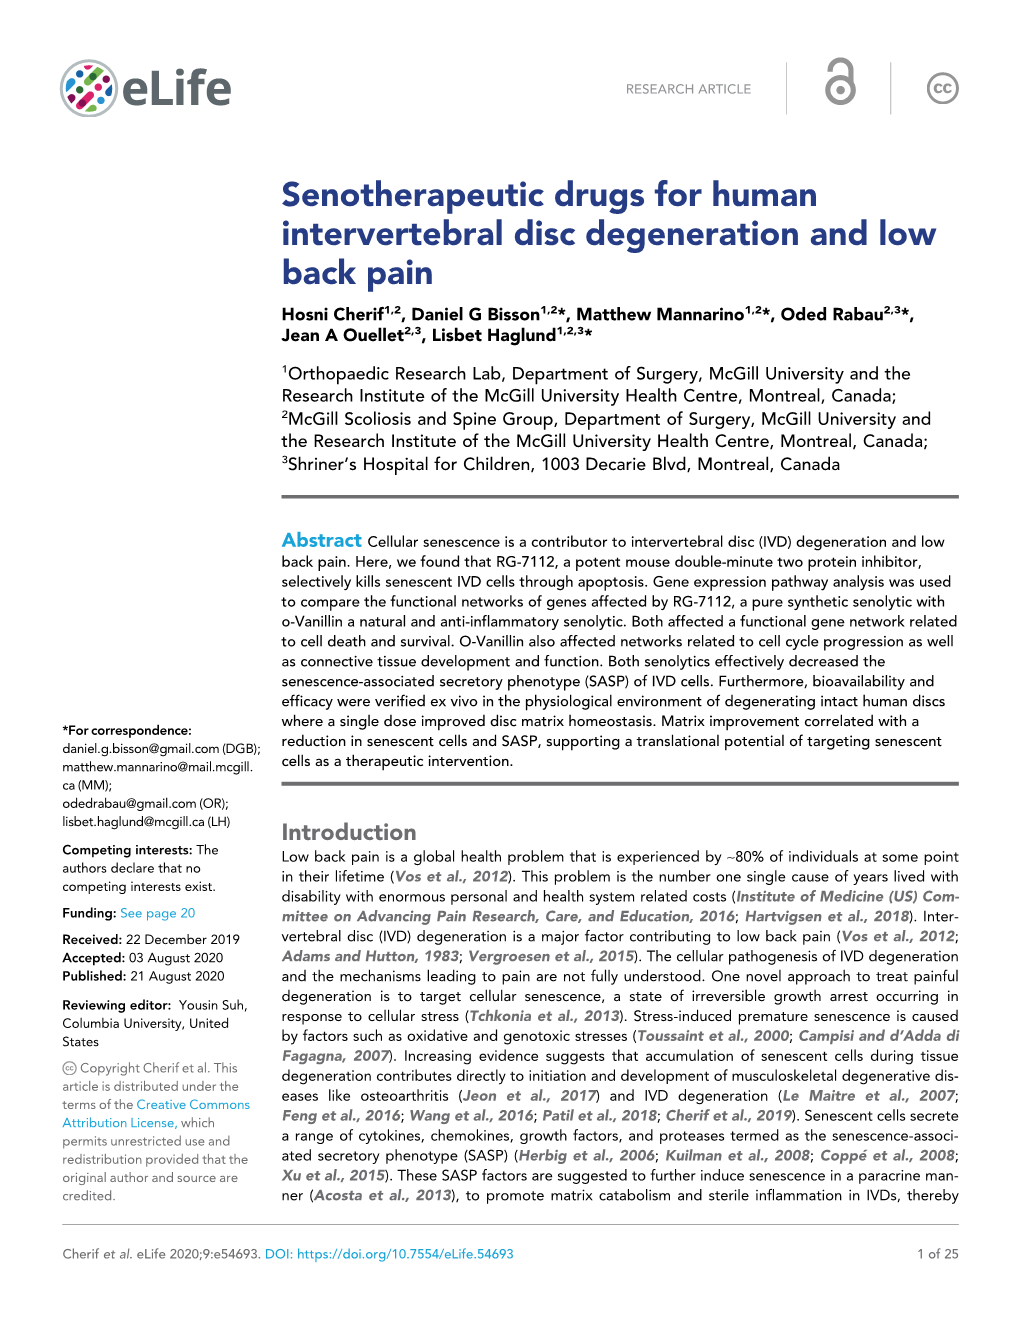 Senotherapeutic Drugs for Human Intervertebral Disc Degeneration and Low Back Pain